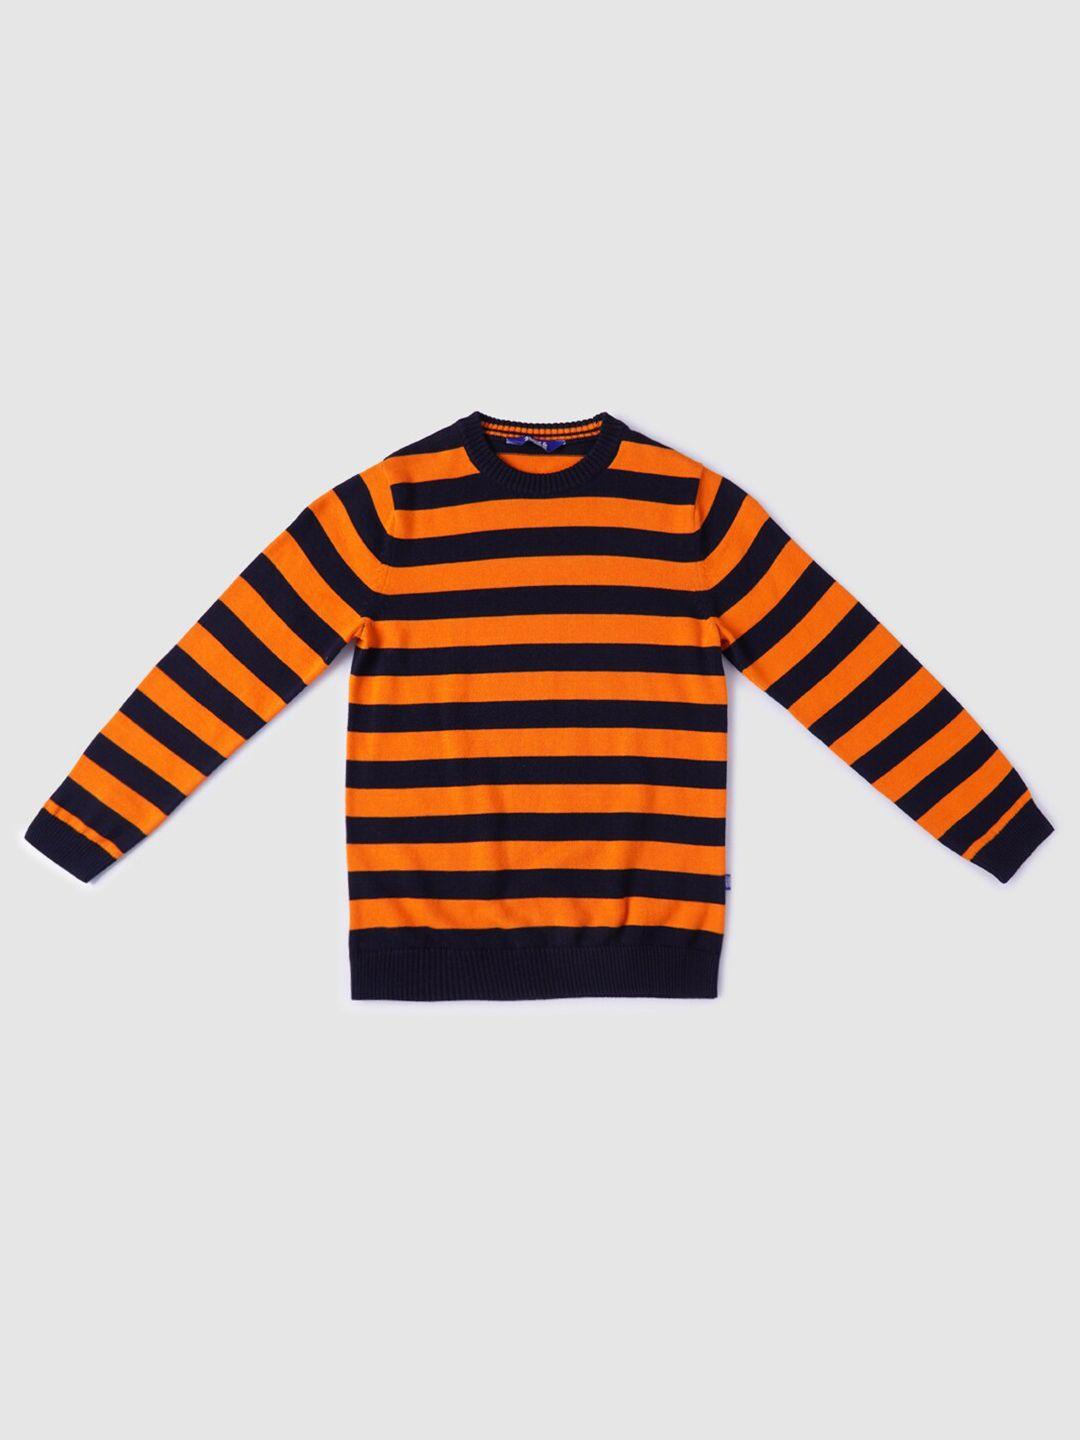 jack & jones boys orange & black striped sweater